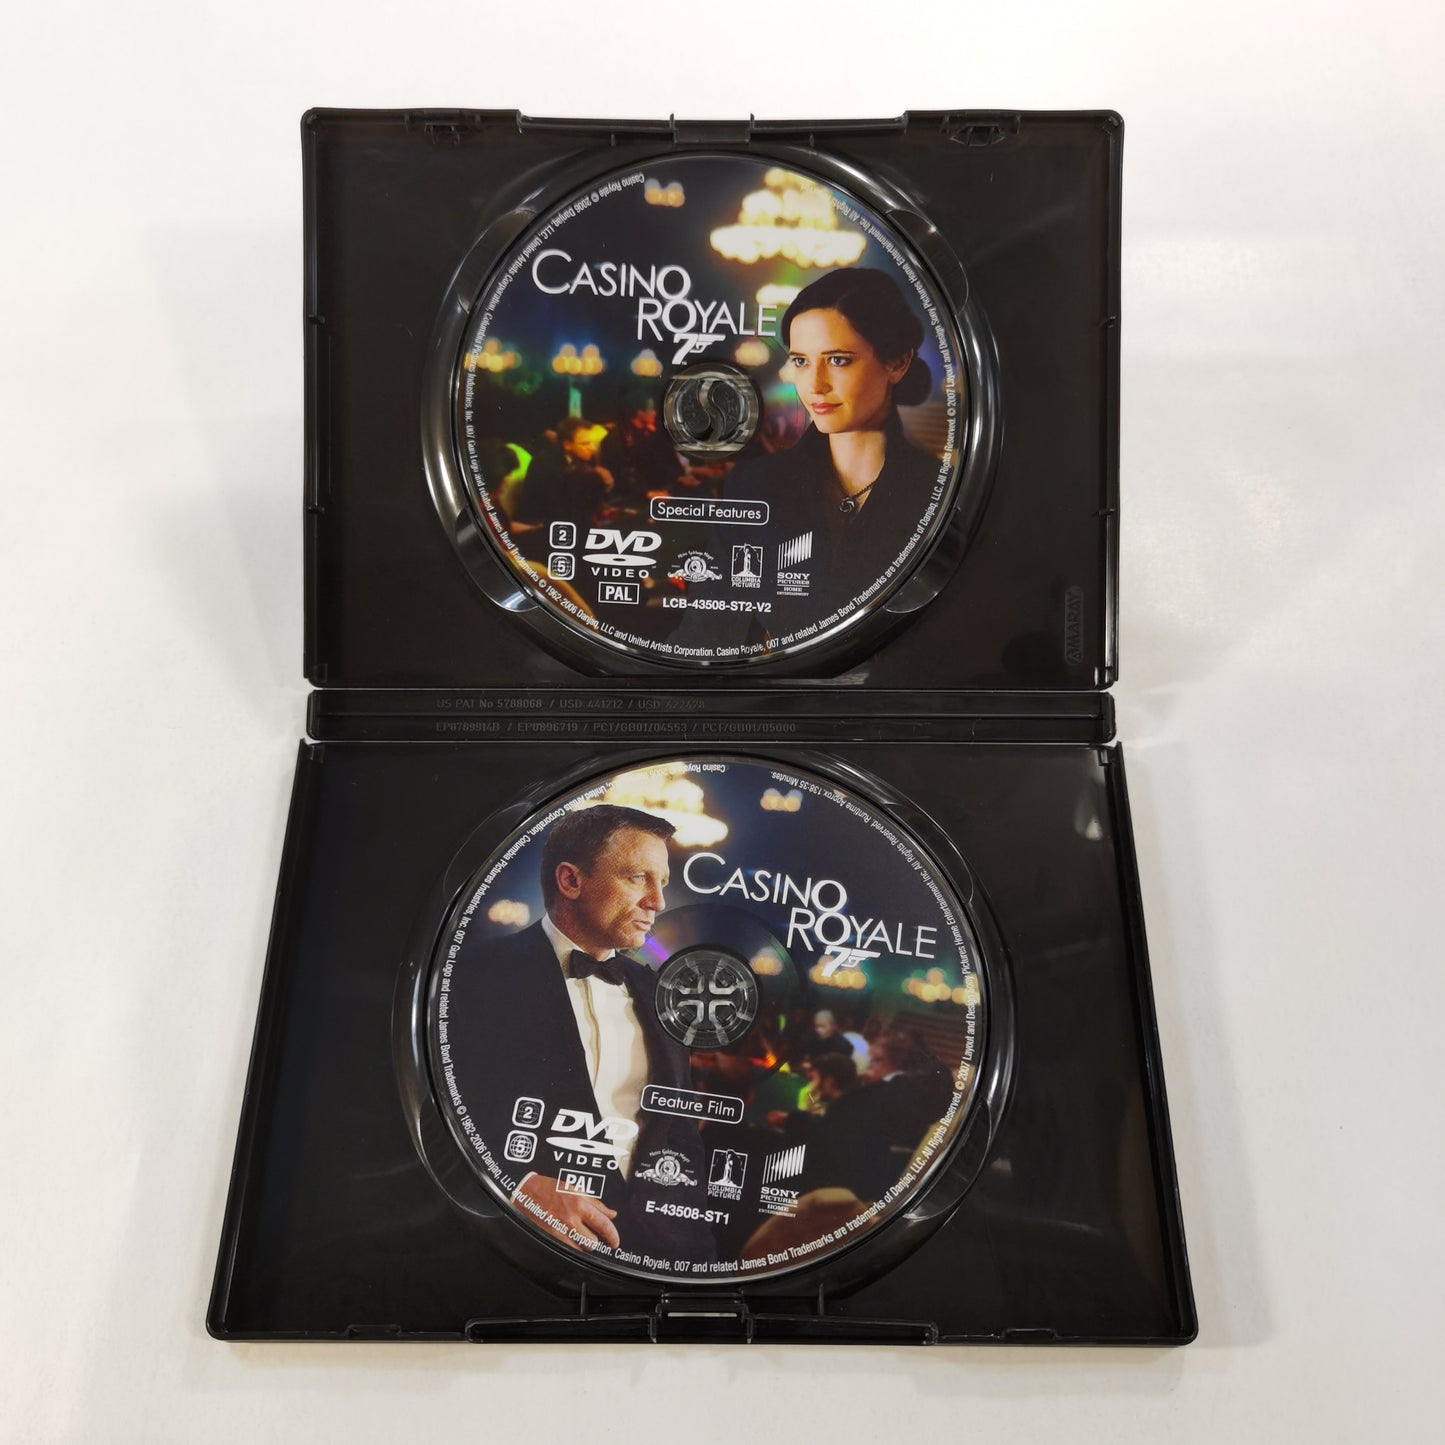 007: Casino Royale (2006) - DVD SE 2007 2-Disc Collector's Edition